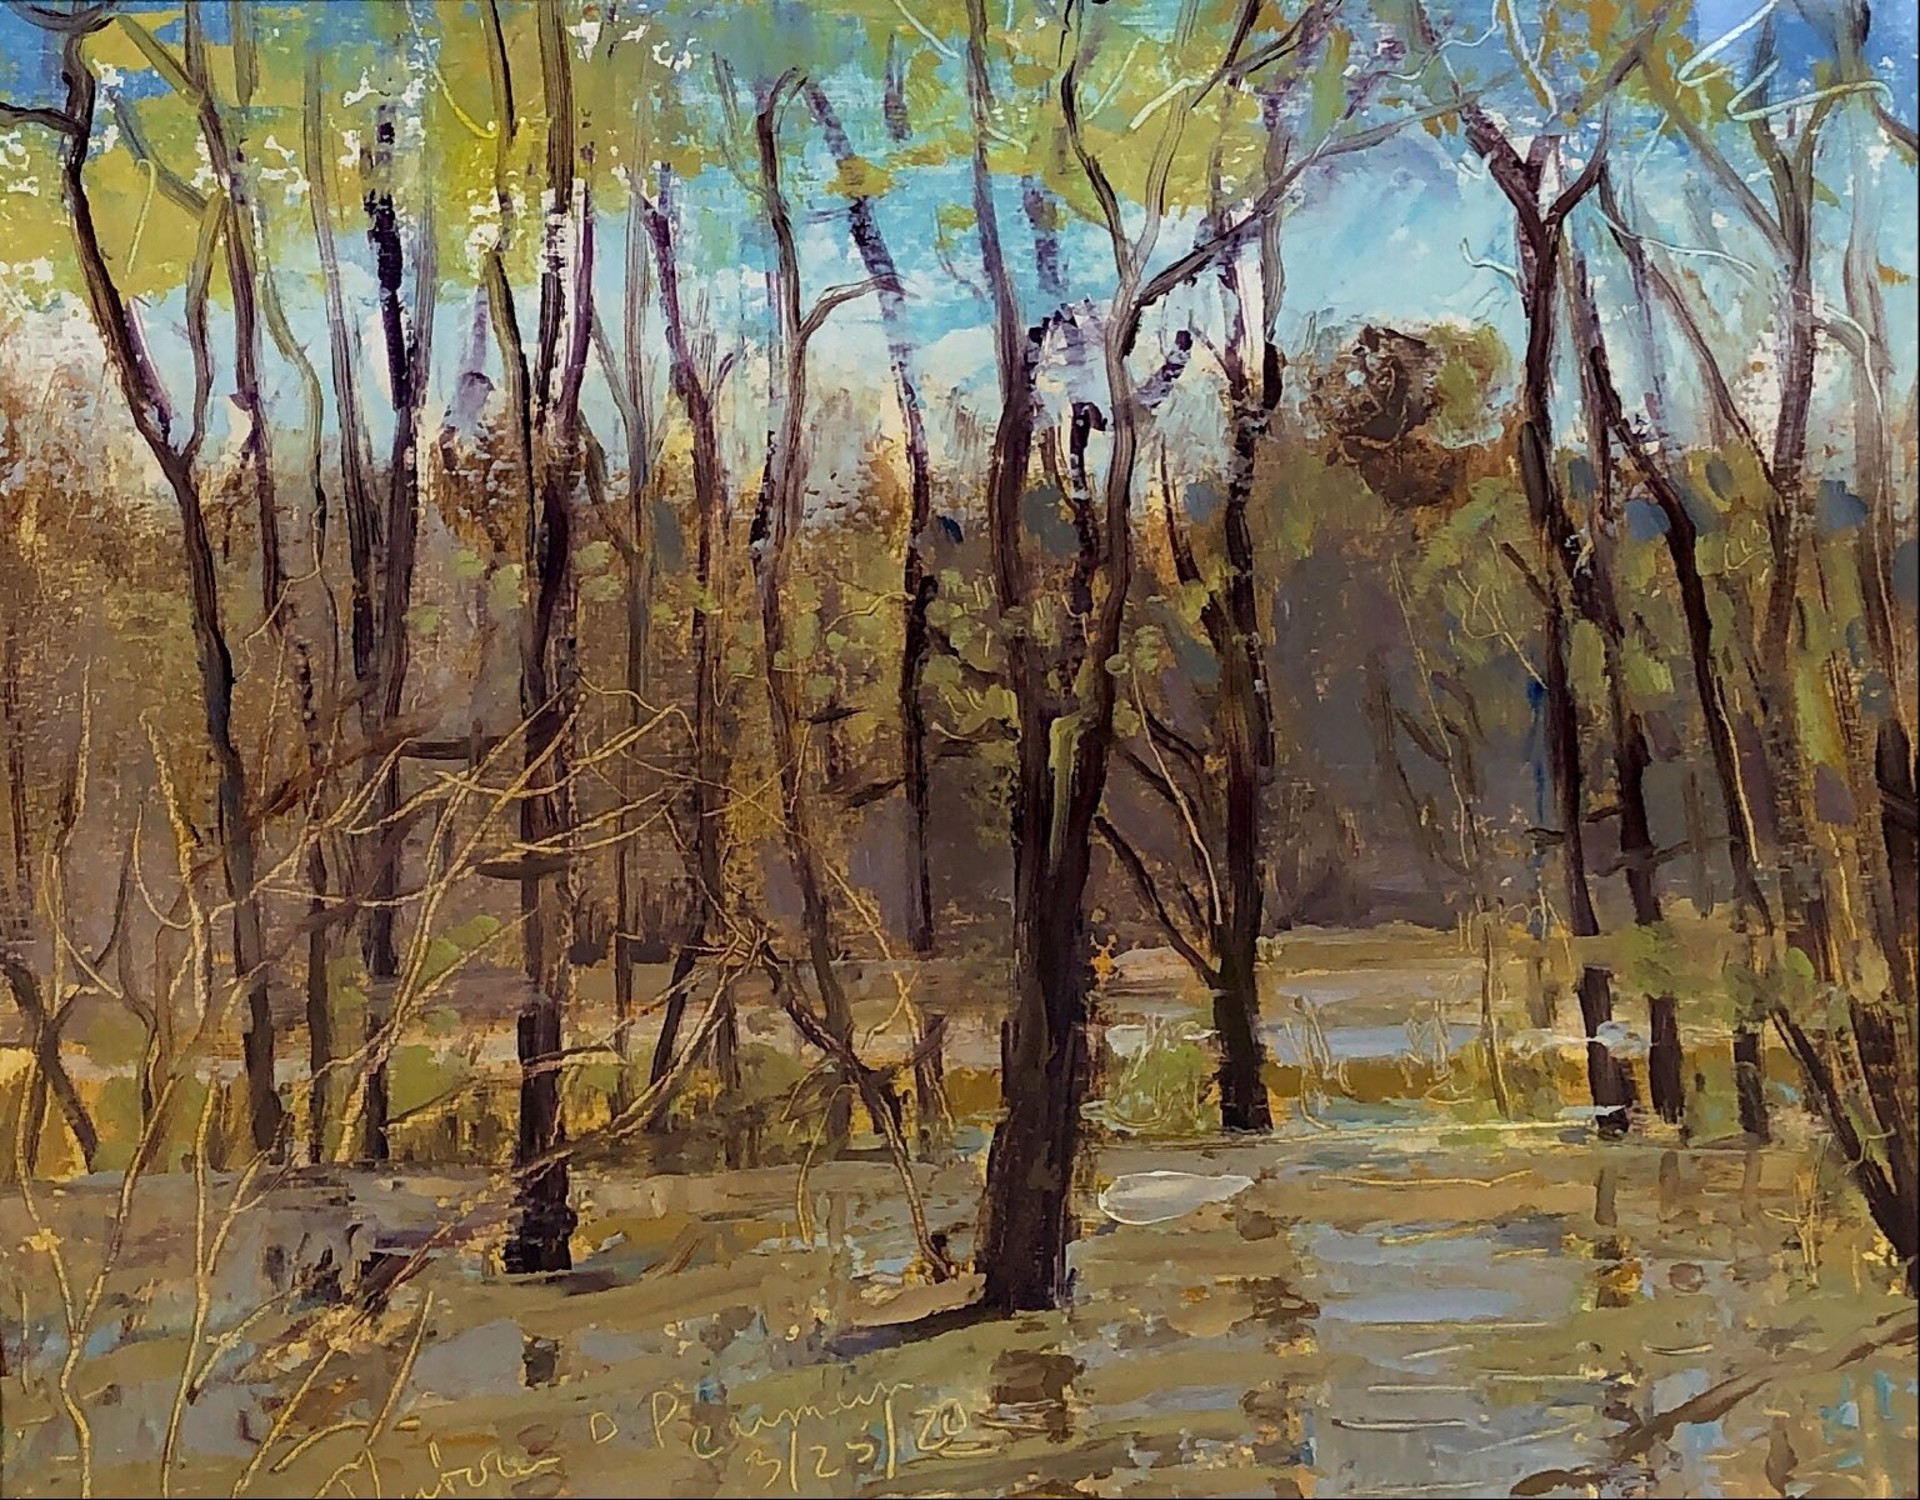 Spring Creek Rising by Victoria Pearmain